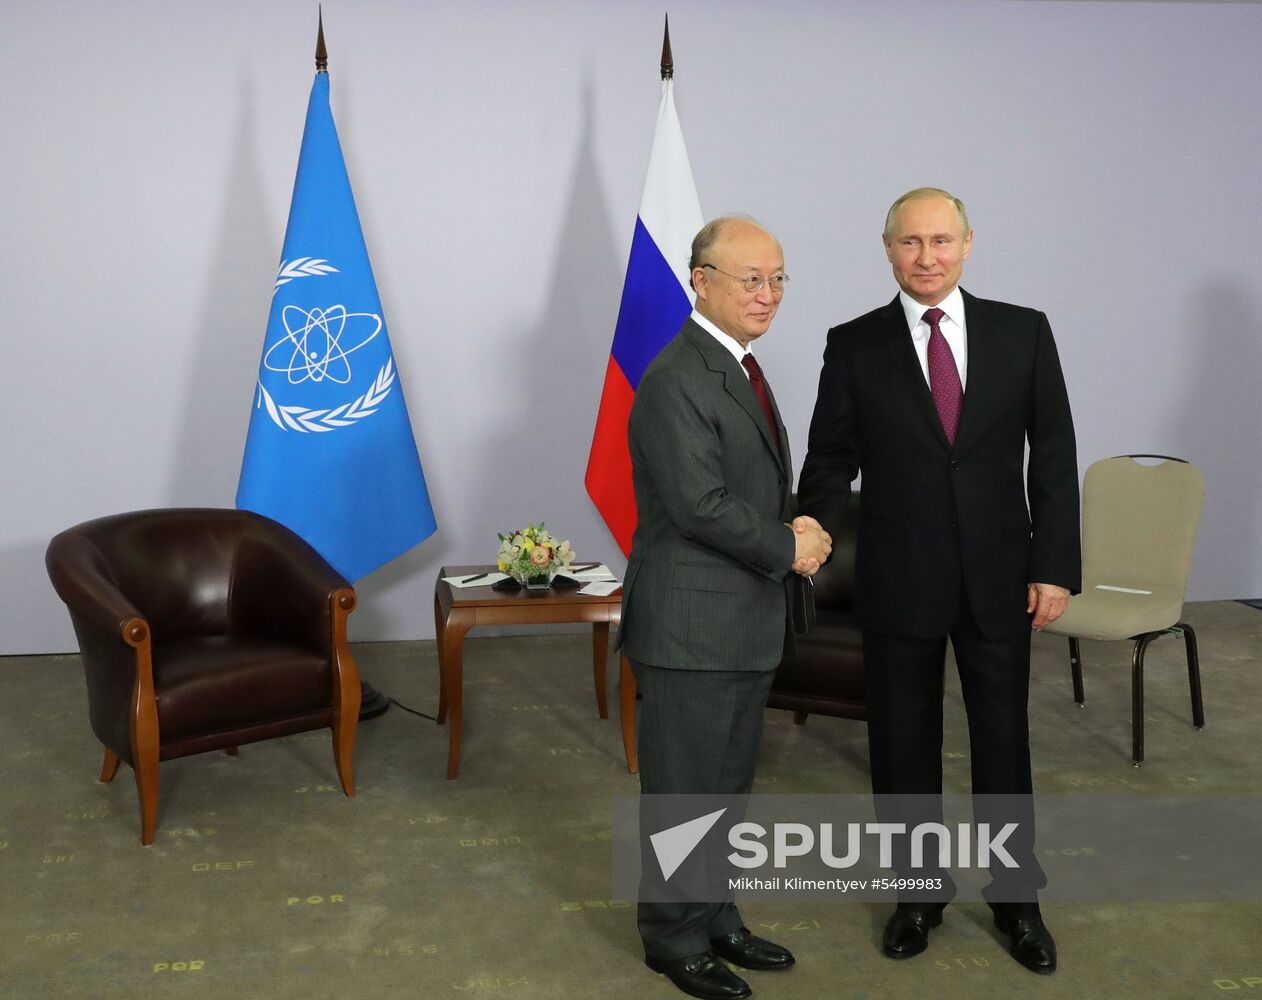 President Putin meets with IAEA Director Amano